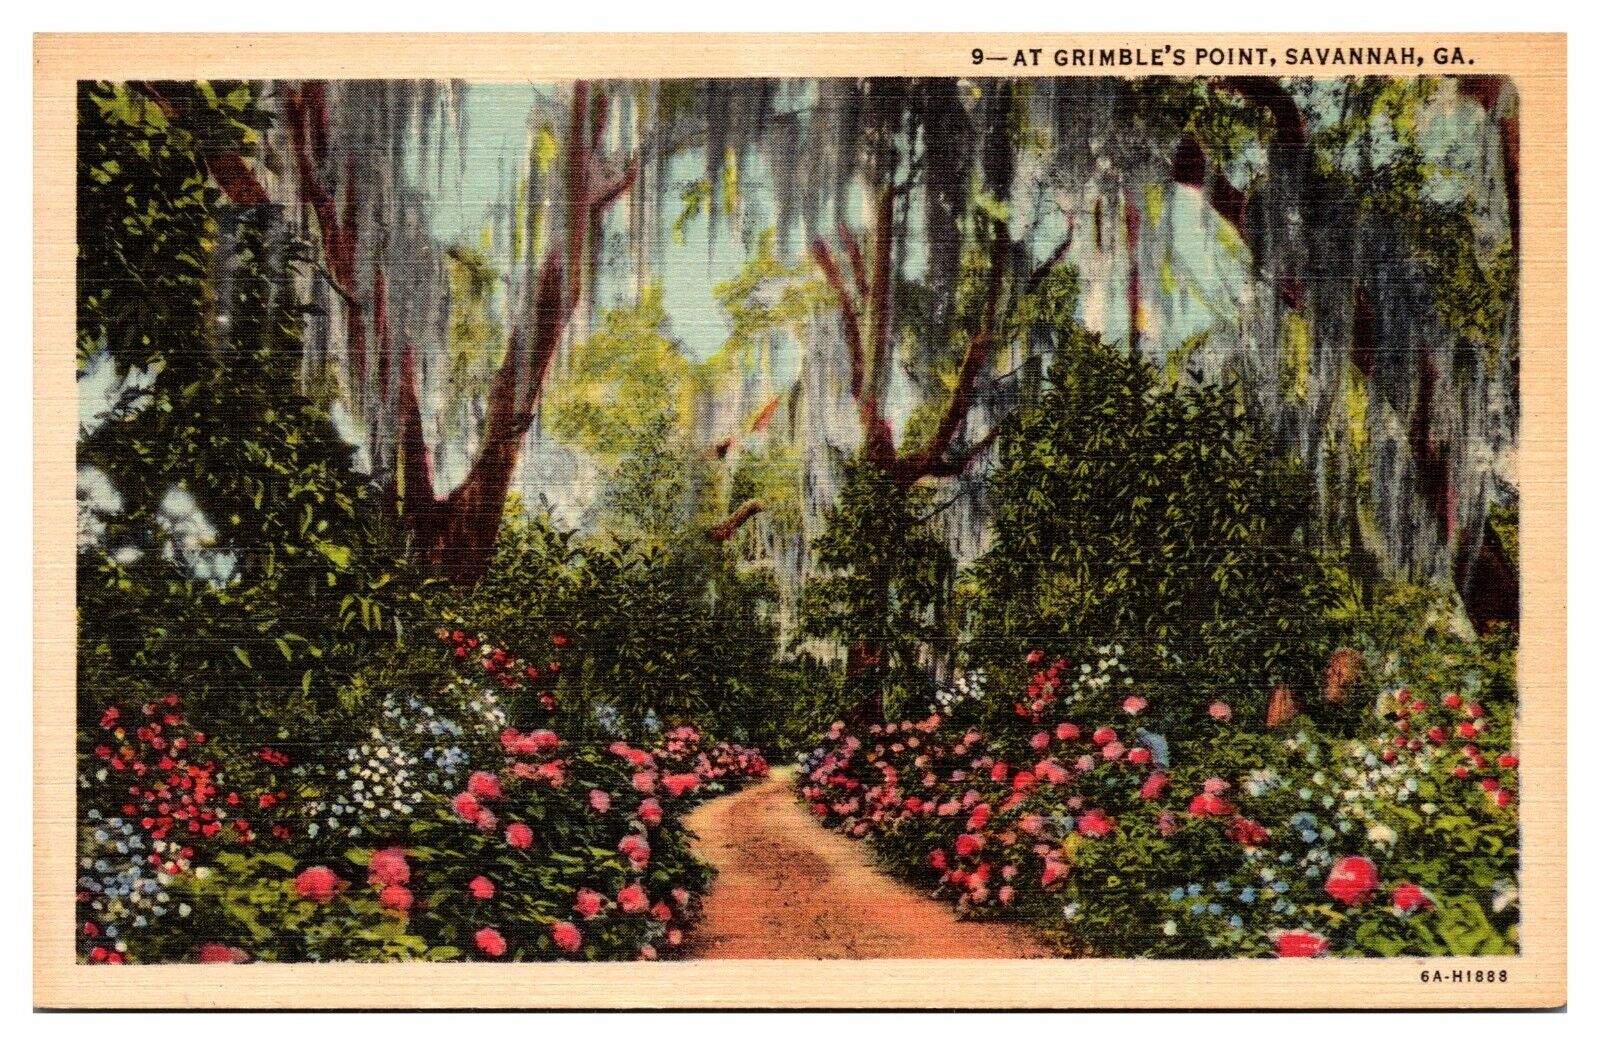 VTG At Gimble\'s Point, Spanish Moss Covered Trees, Flowers, Savannah, GA